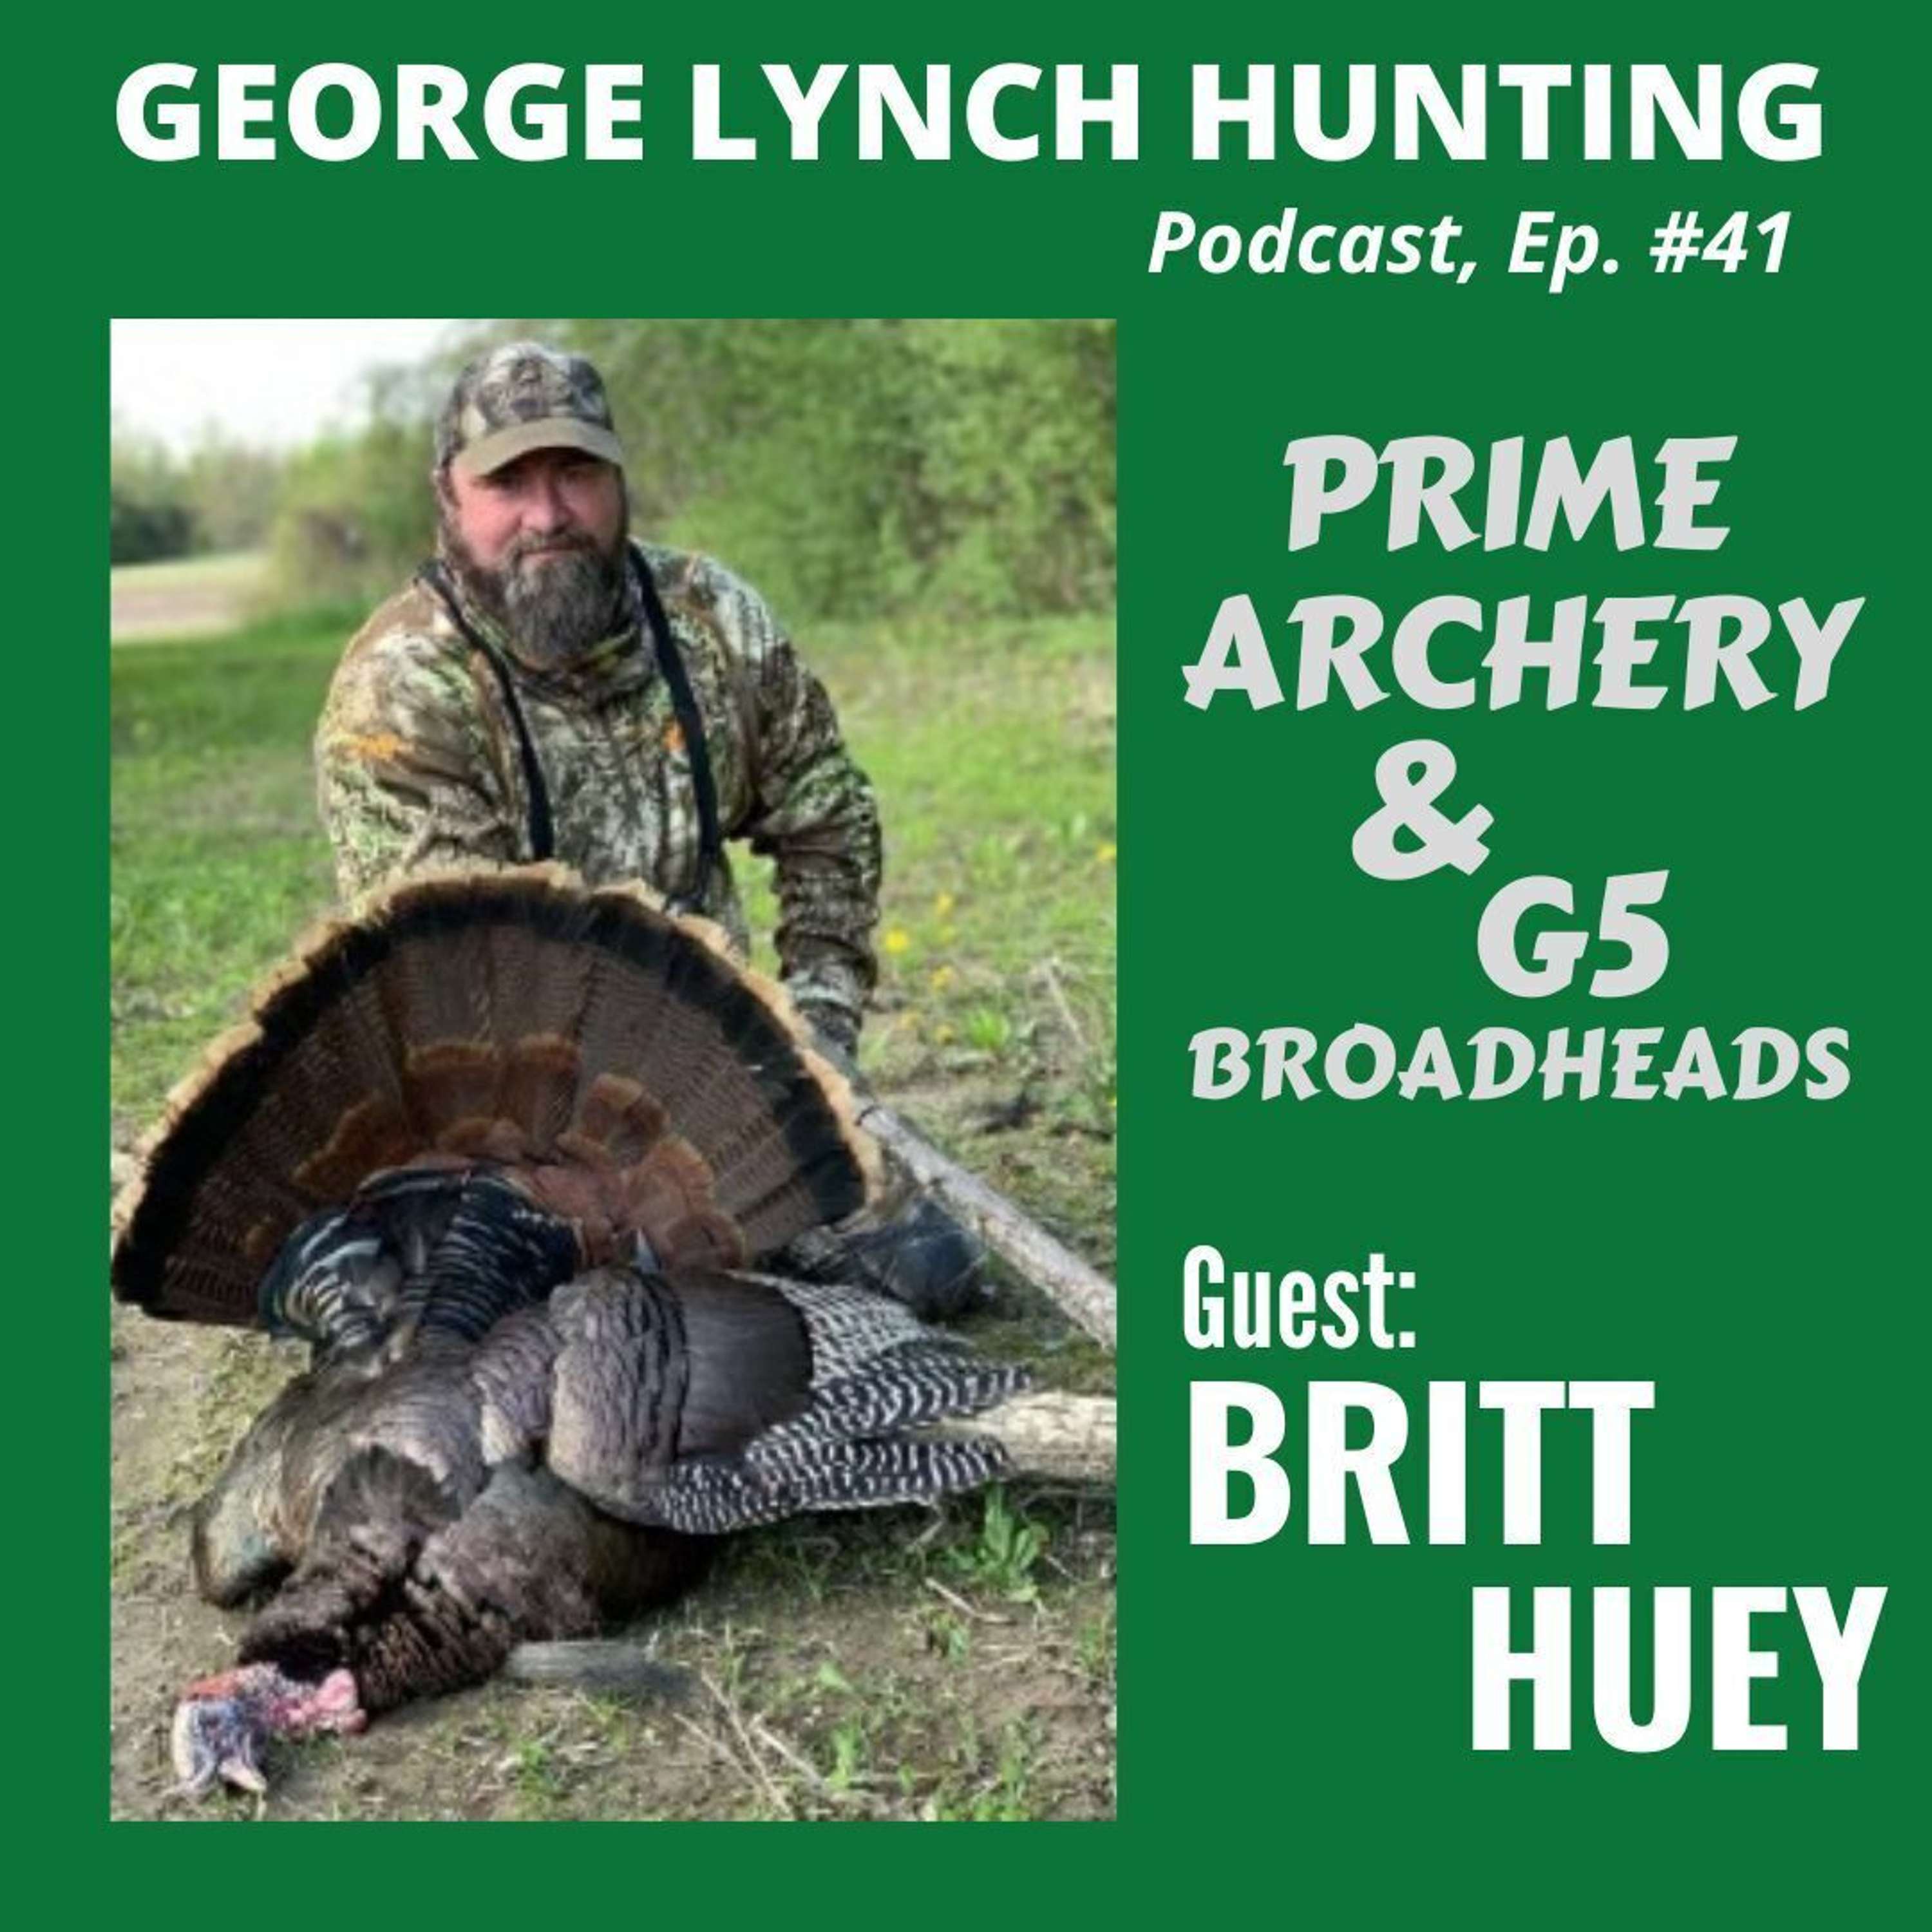 PRIME ARCHERY & G5 BROADHEADS viewed by BRITT HUEY